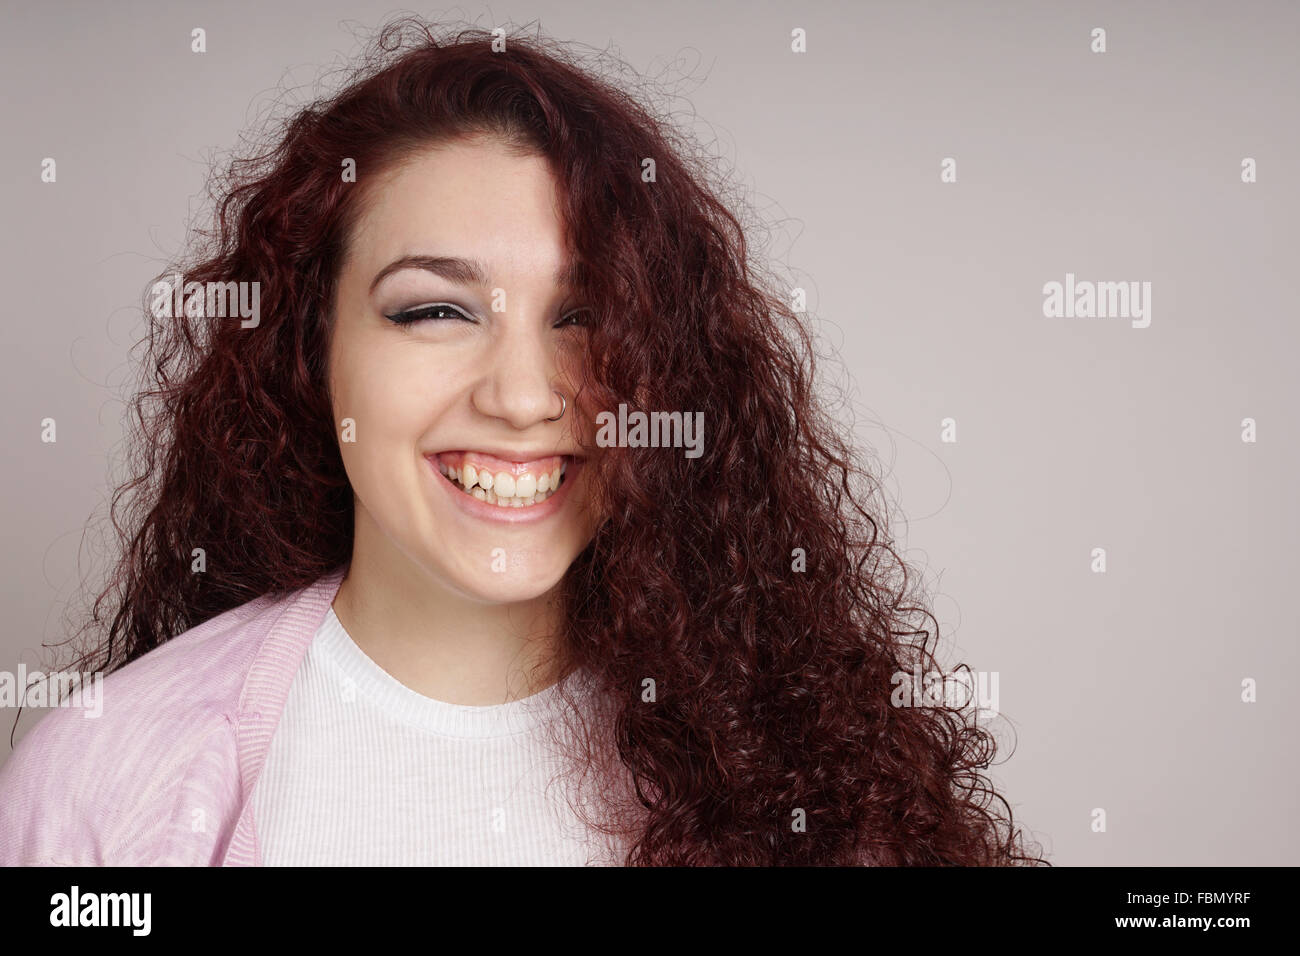 teenage girl with a big smile Stock Photo